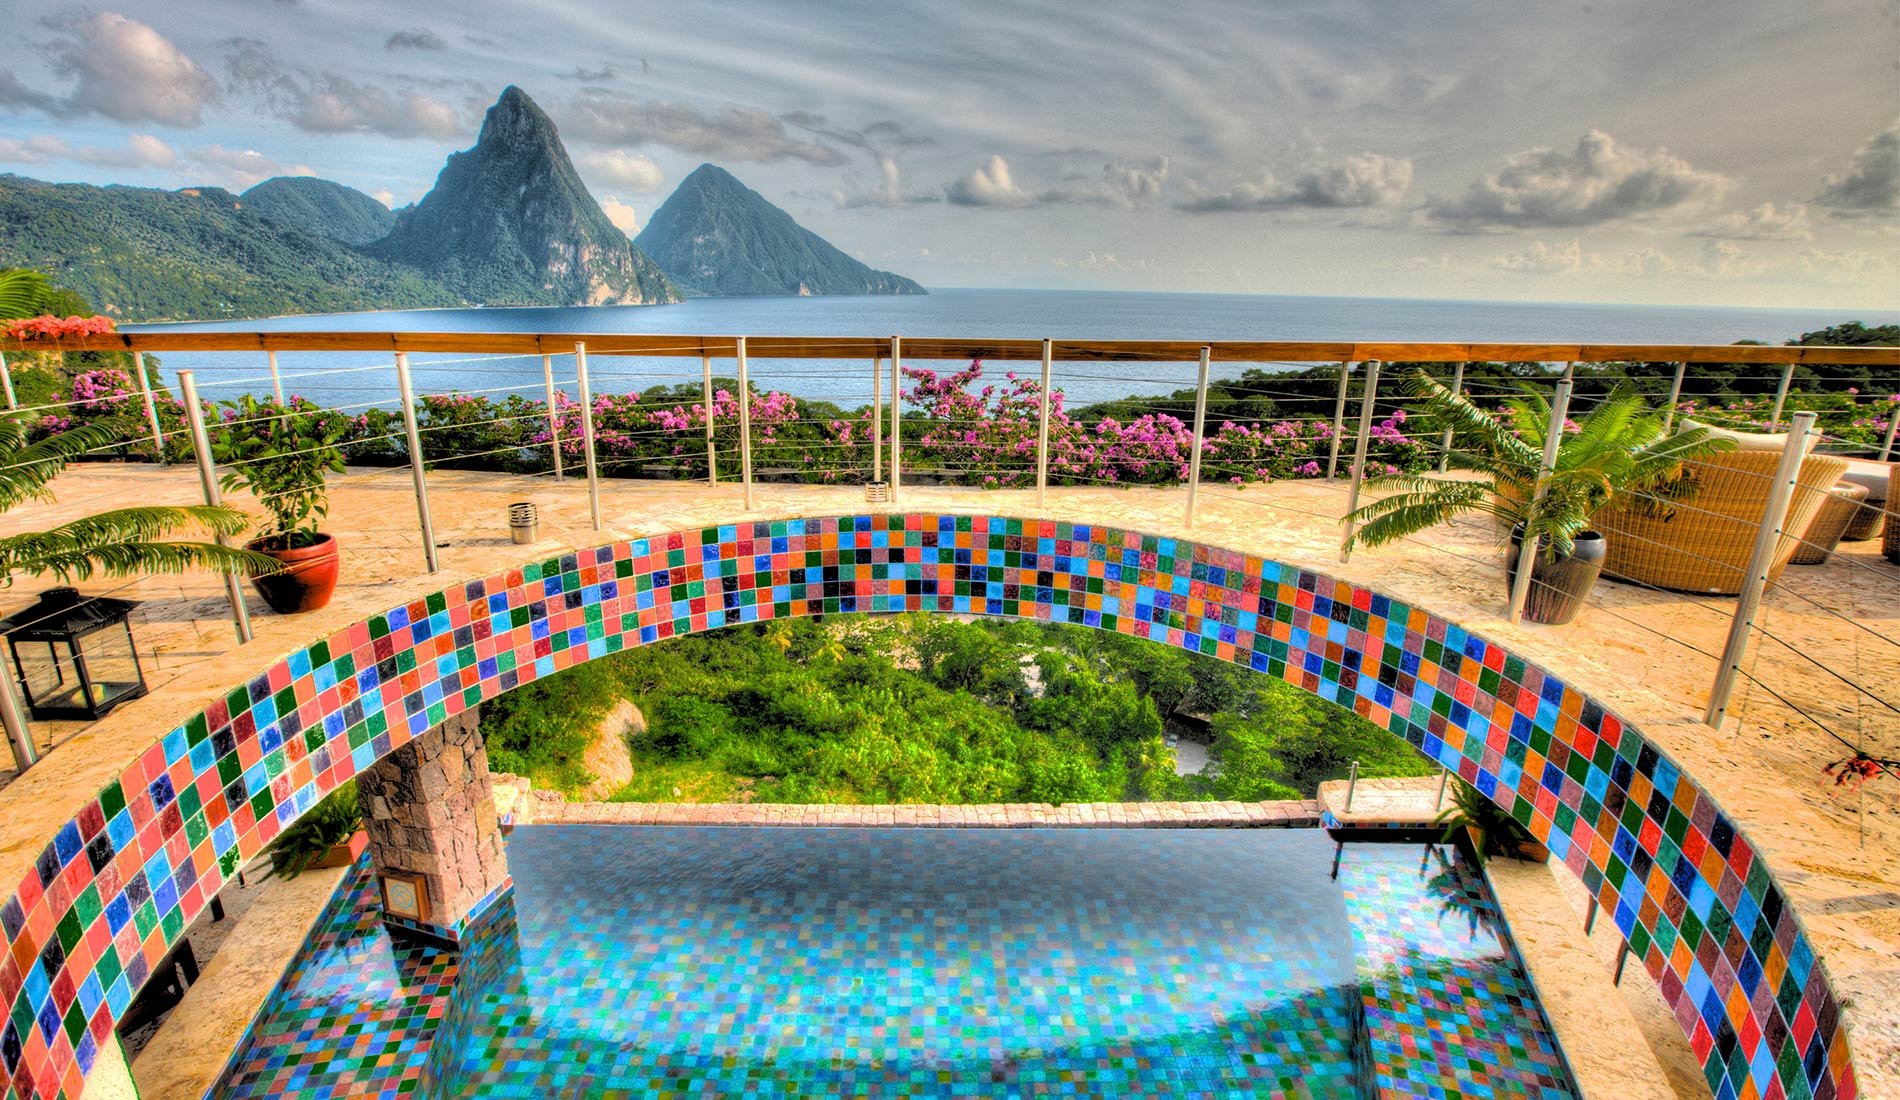 Hôtel de luxe Jade Mountain resort 5 étoiles Sainte-Lucie caraïbes piscine